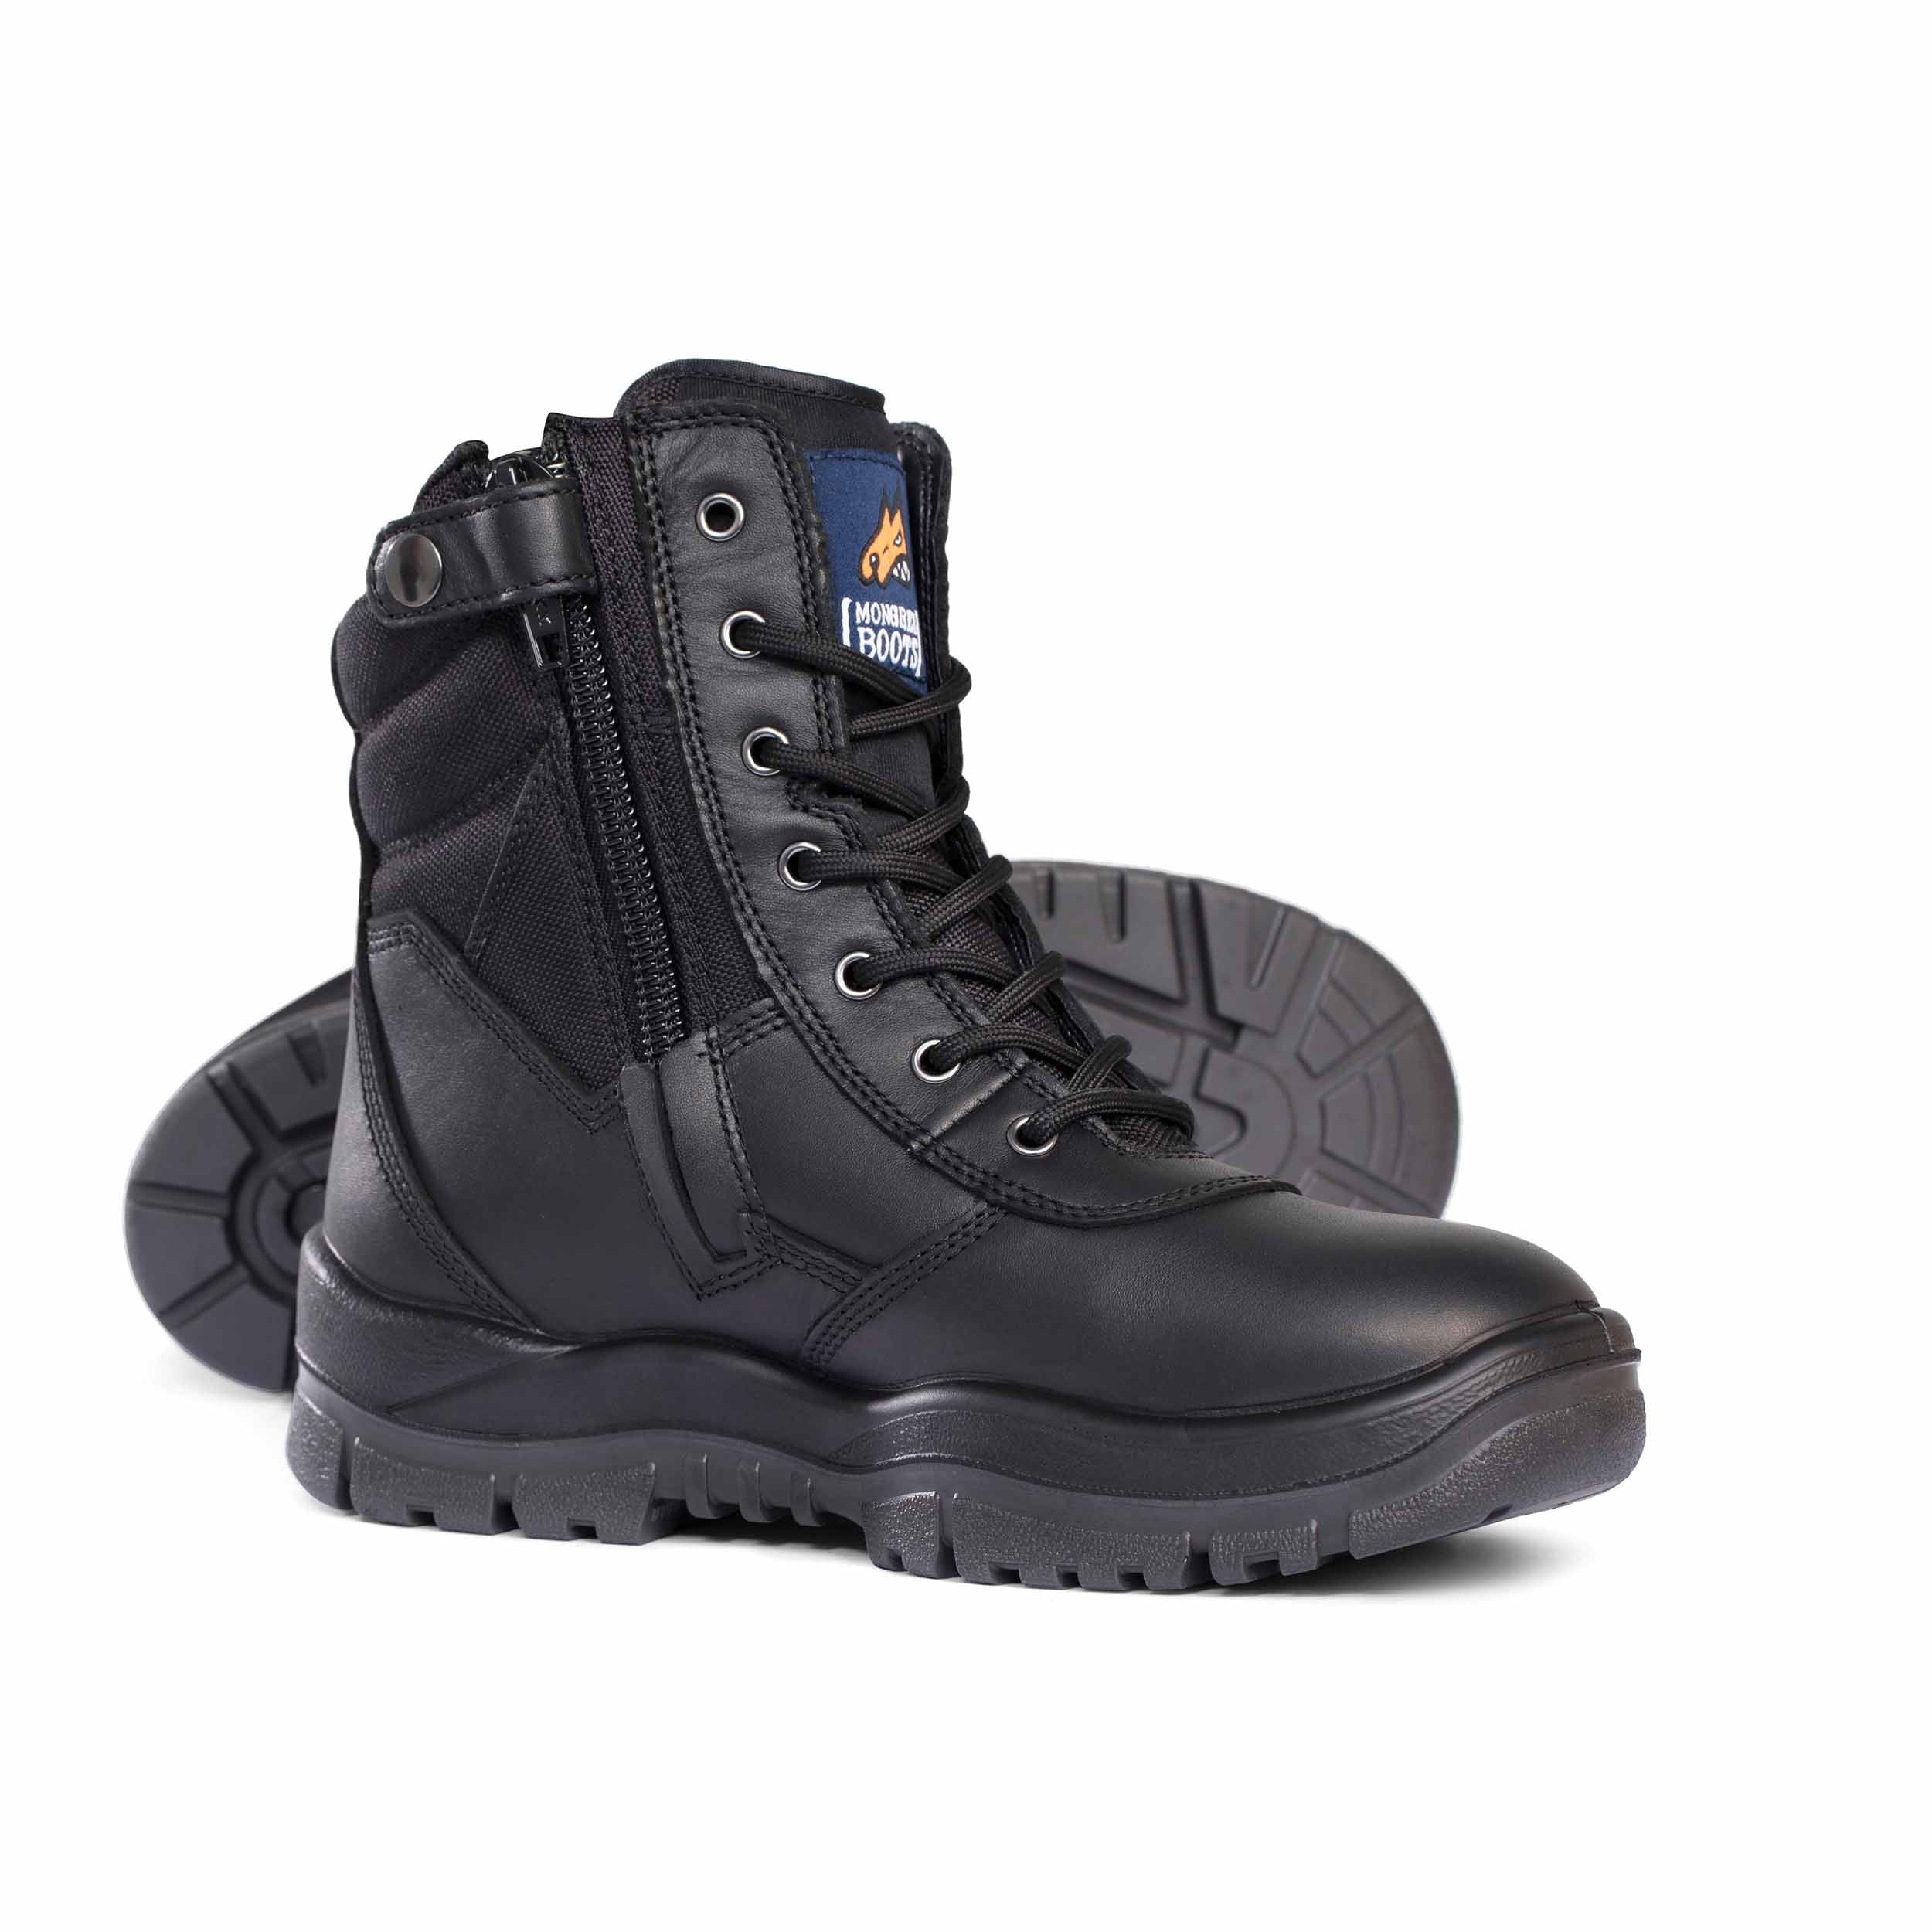 Mongrel 251020 Black High Leg Zipsider Safety Boot